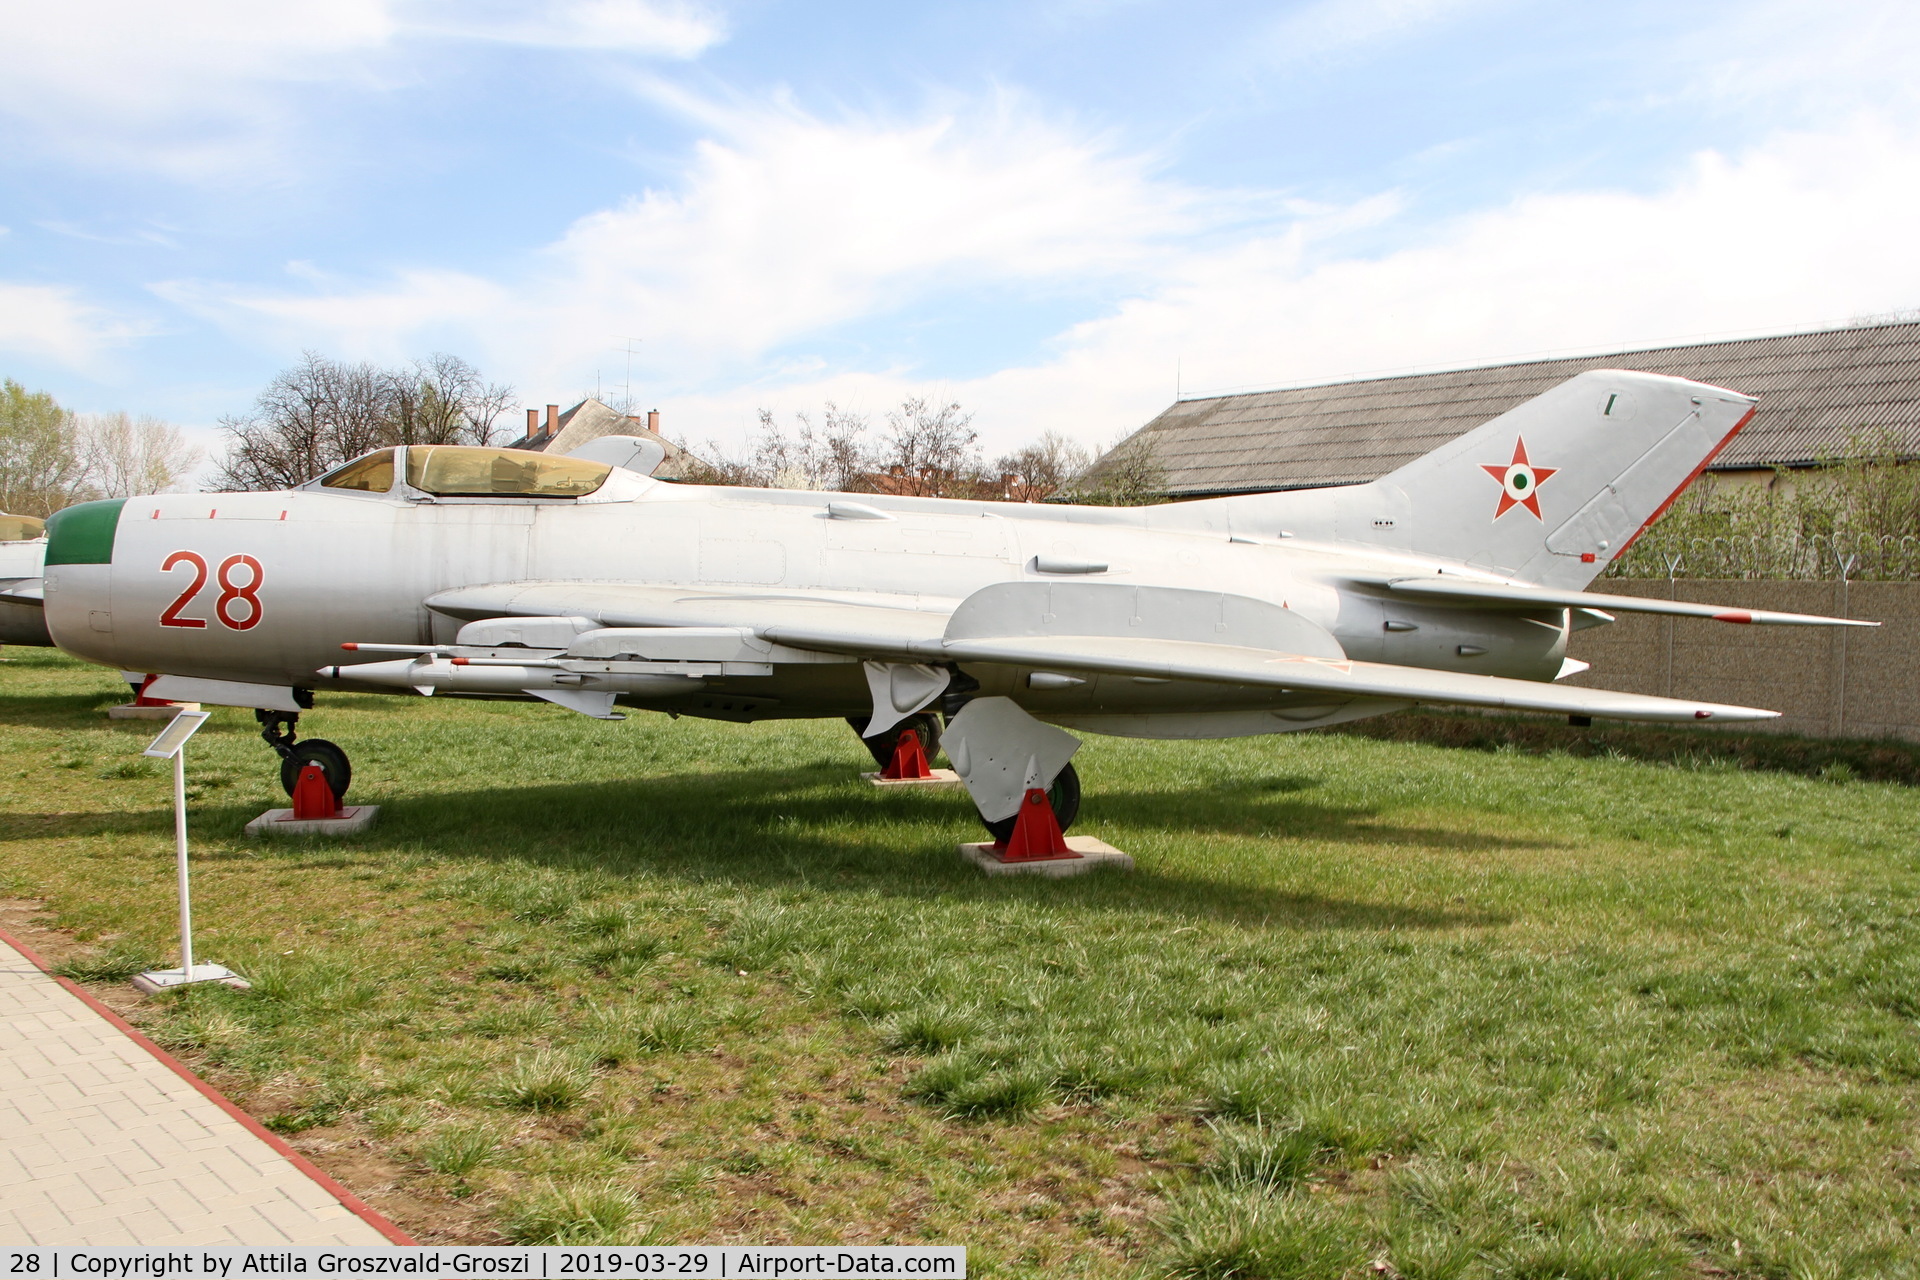 28, 1960 Mikoyan-Gurevich MiG-19PM C/N 651028, RepTár. Szolnok aviation history museum, Hungary